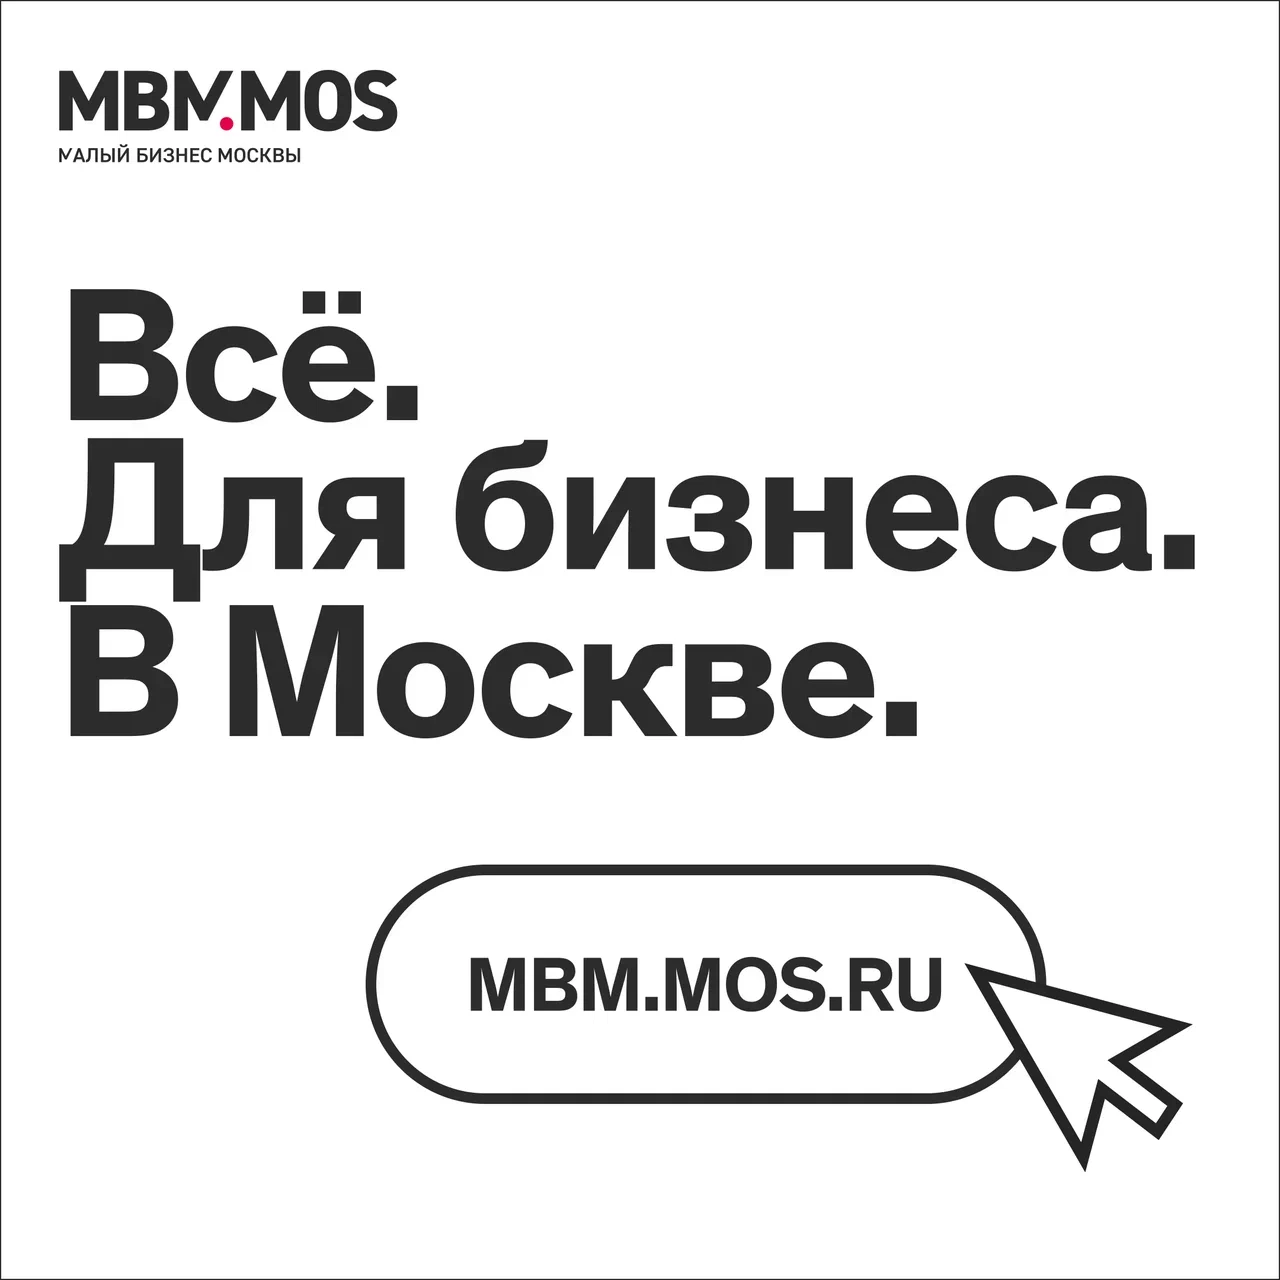 https://mbm.mos.ru 